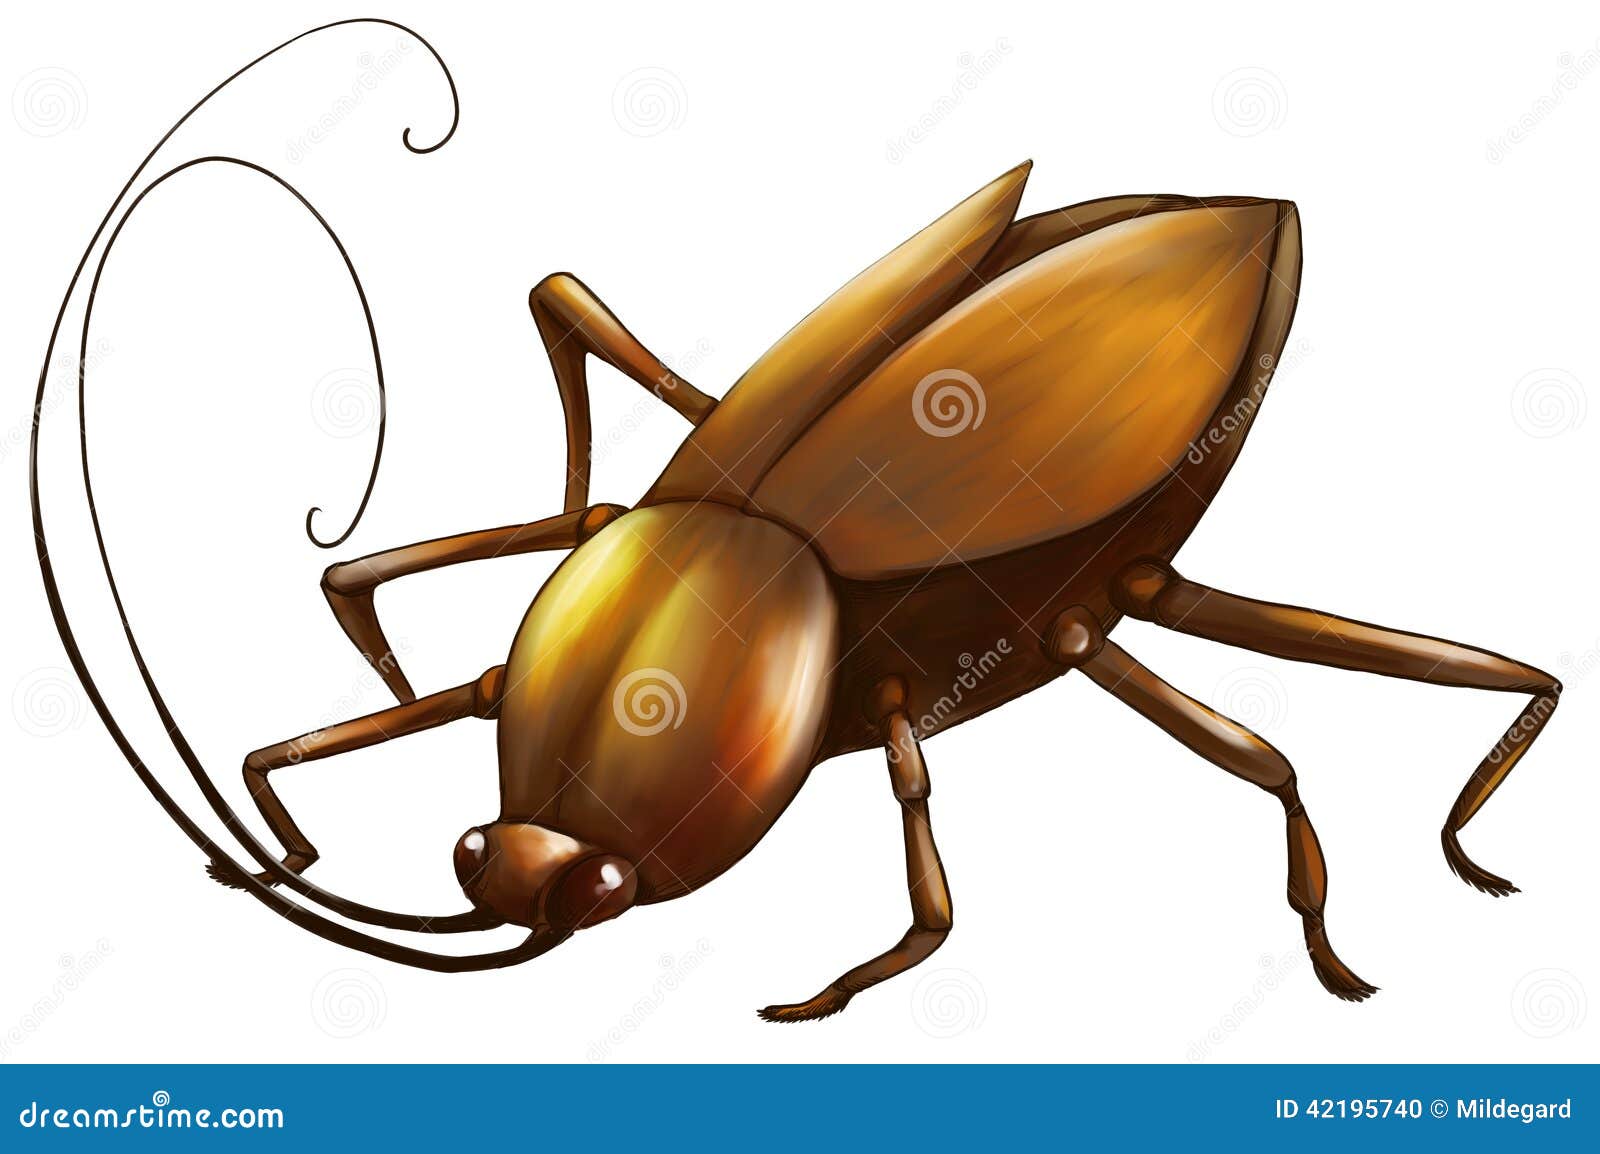 Cockroach Digital Art Stock Illustration - Image: 42195740